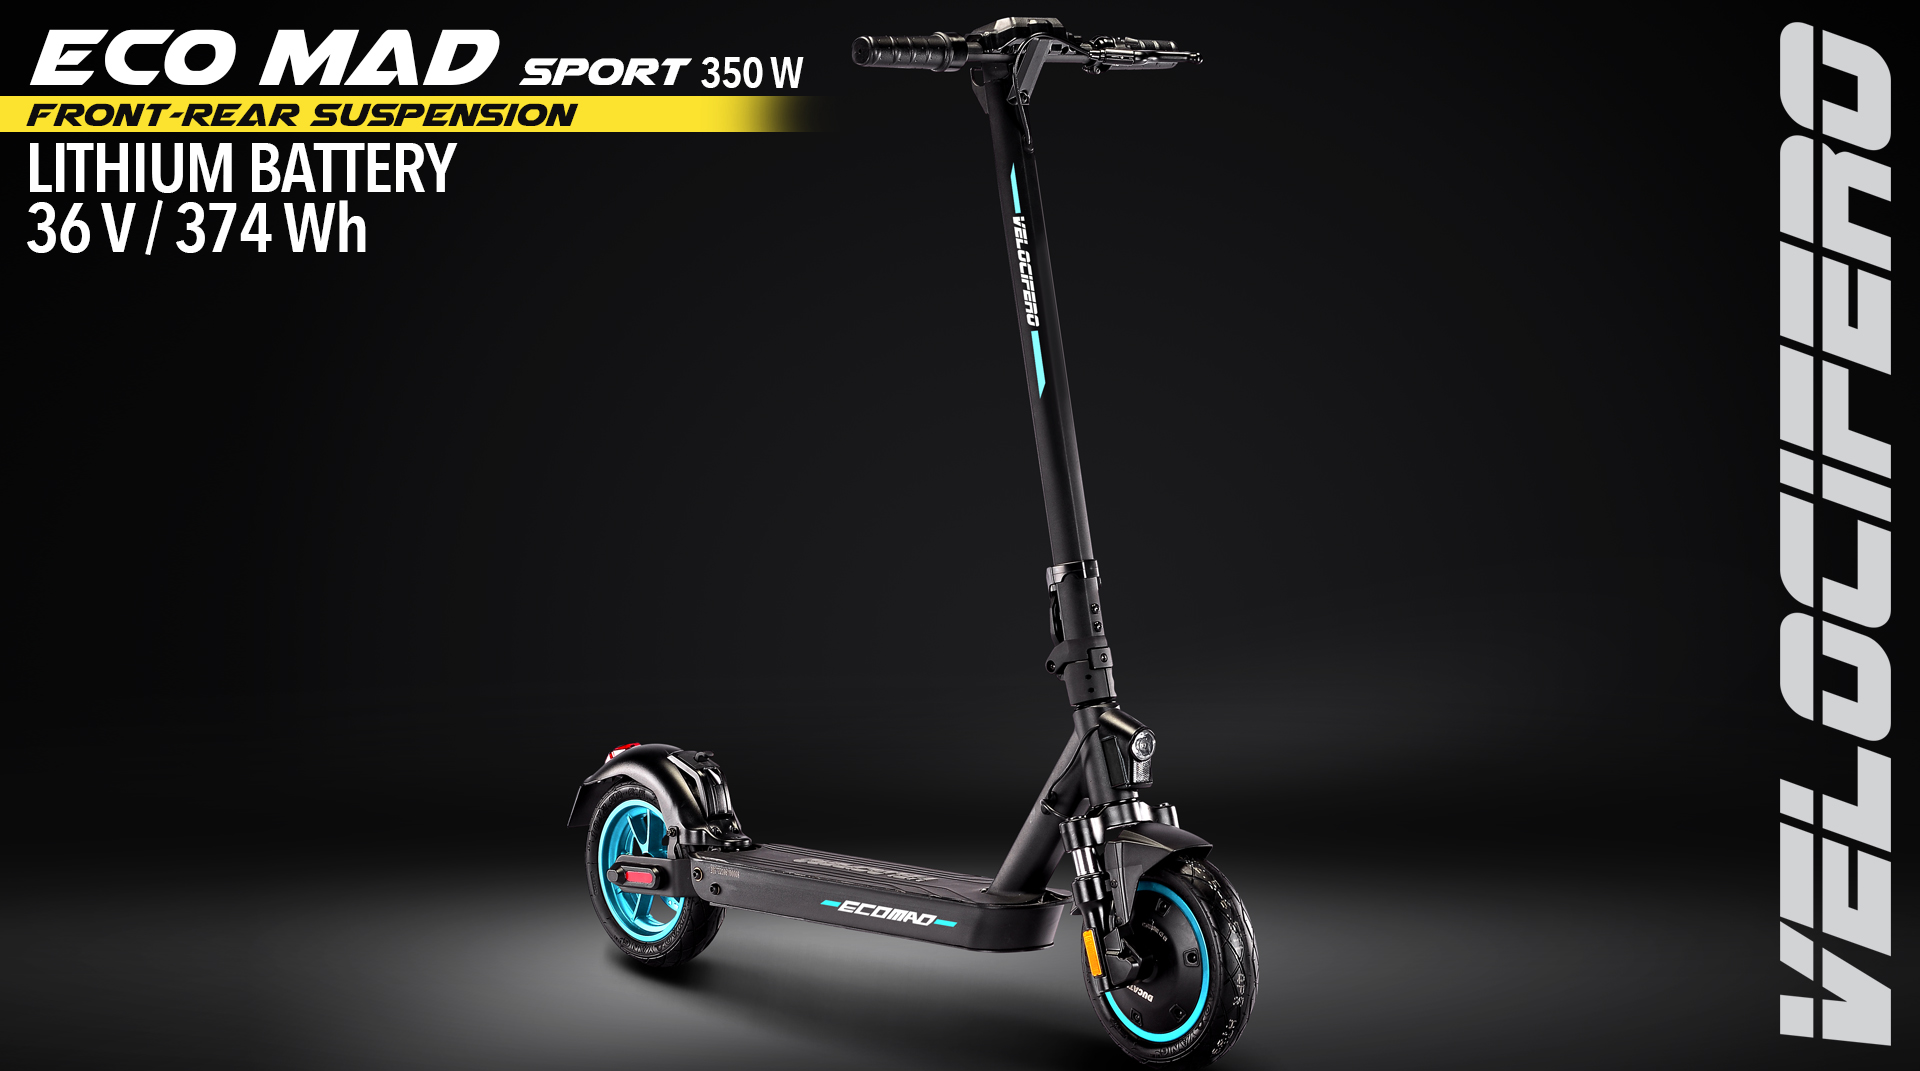 Eco Mad Sport 350w electric kick scooter velocifero emobility alessandro tartarini designer